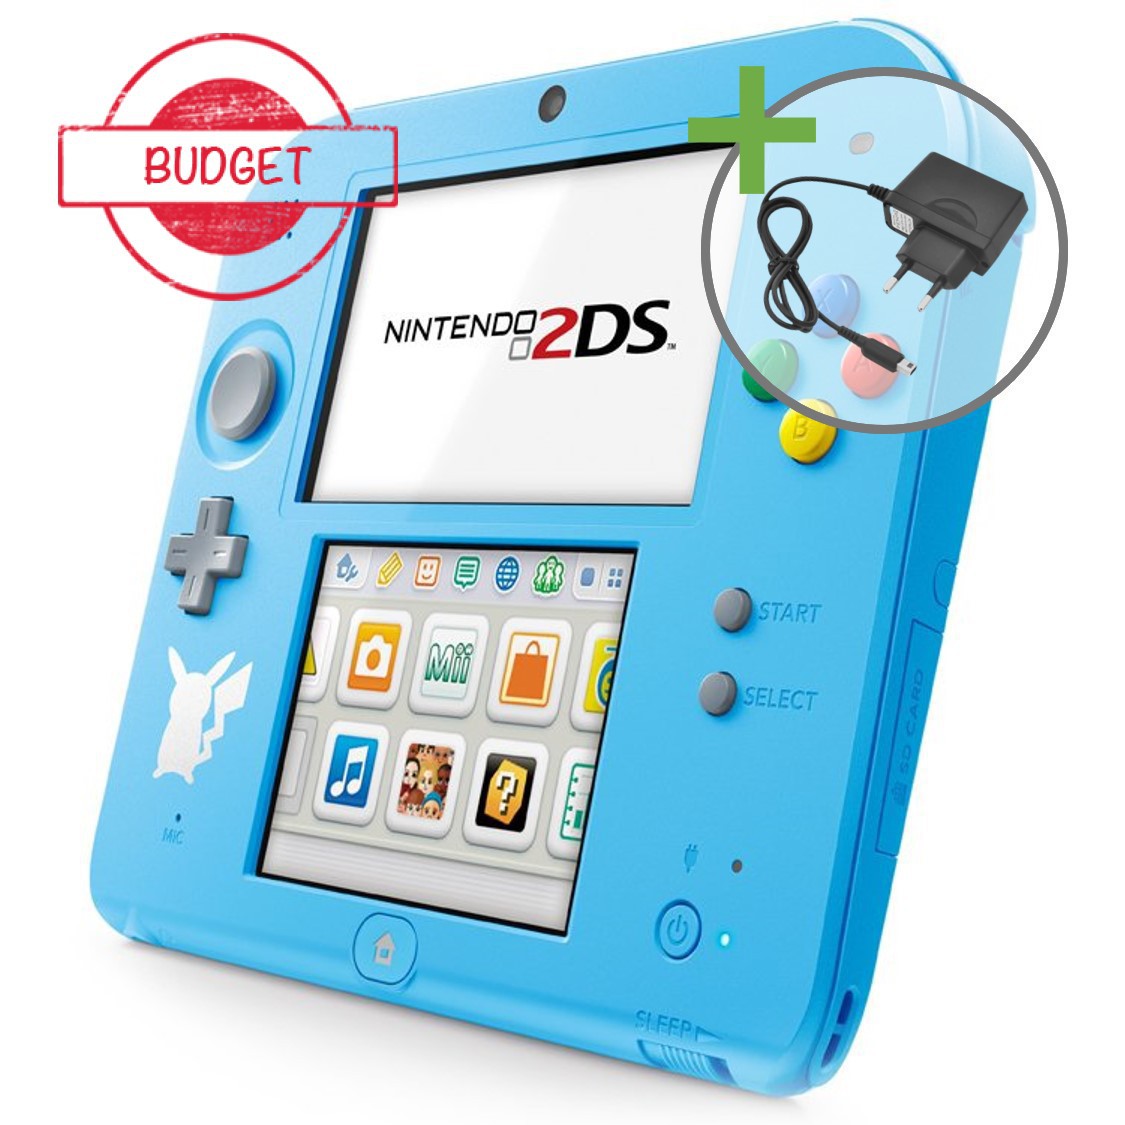 Nintendo 2DS - Pokémon Sun Moon Edition (Light Blue) - Budget - Nintendo 3DS Hardware